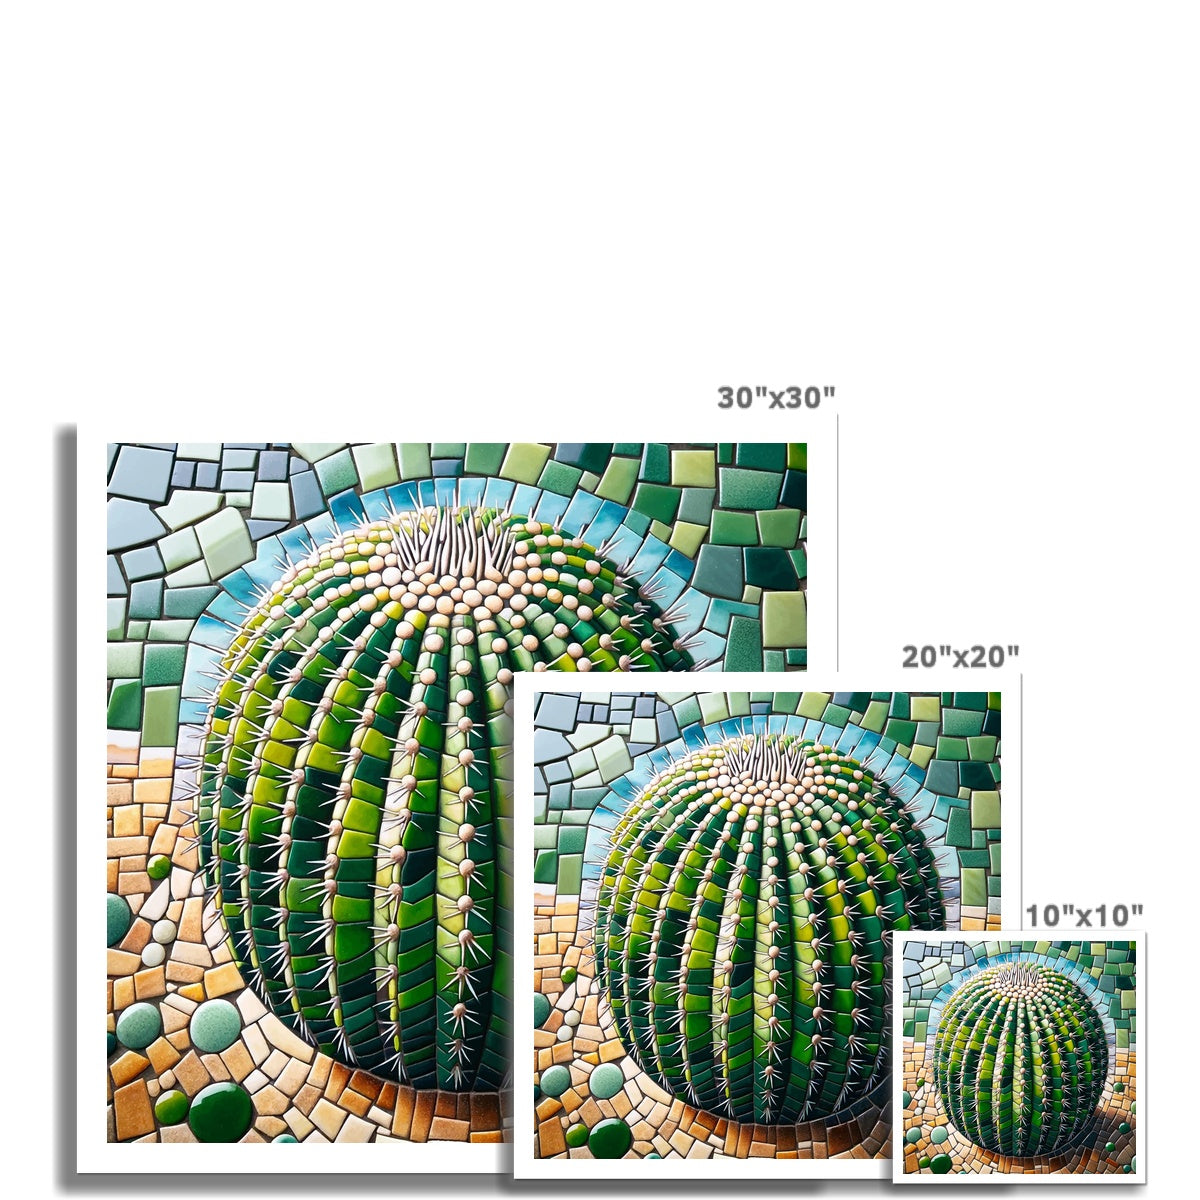 Barrel Cactus Mosaic Hahnemühle German Etching Print